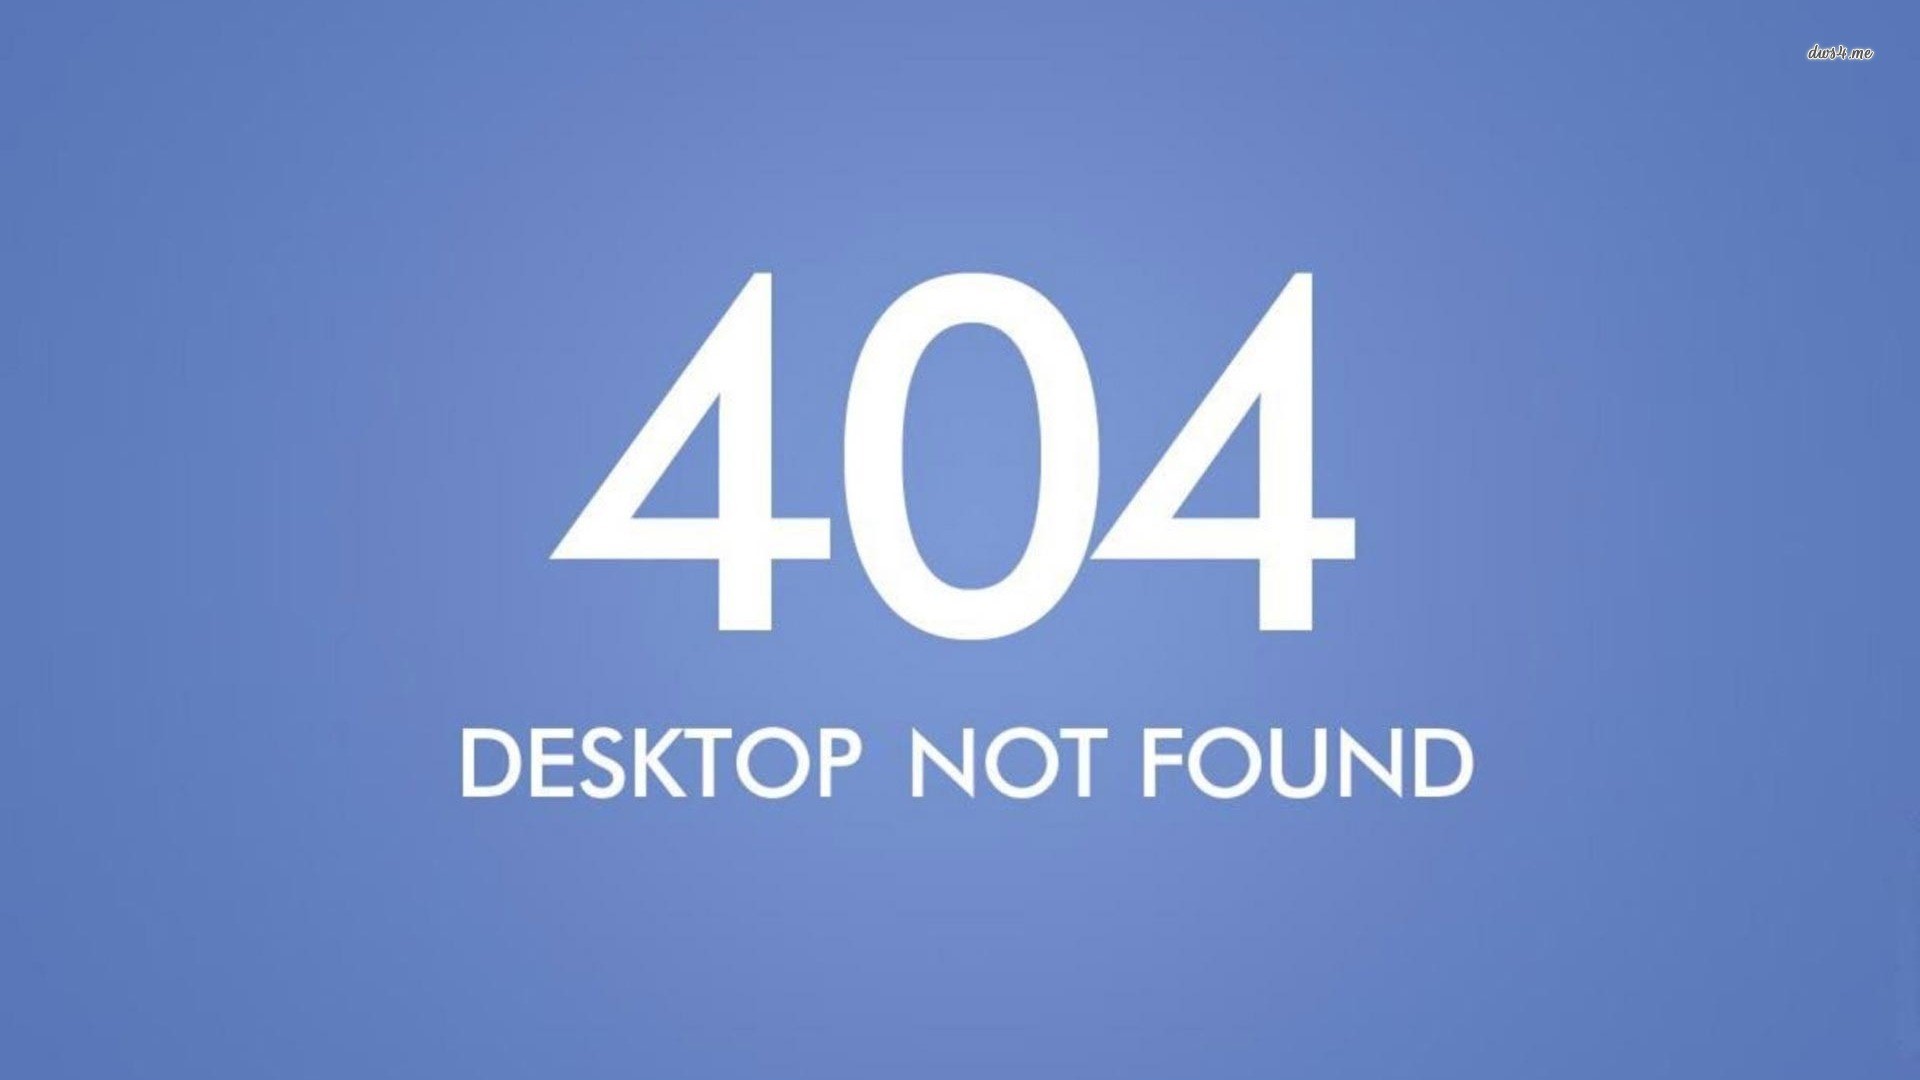 Name 9845 desktop not found 1920×1080 digital art